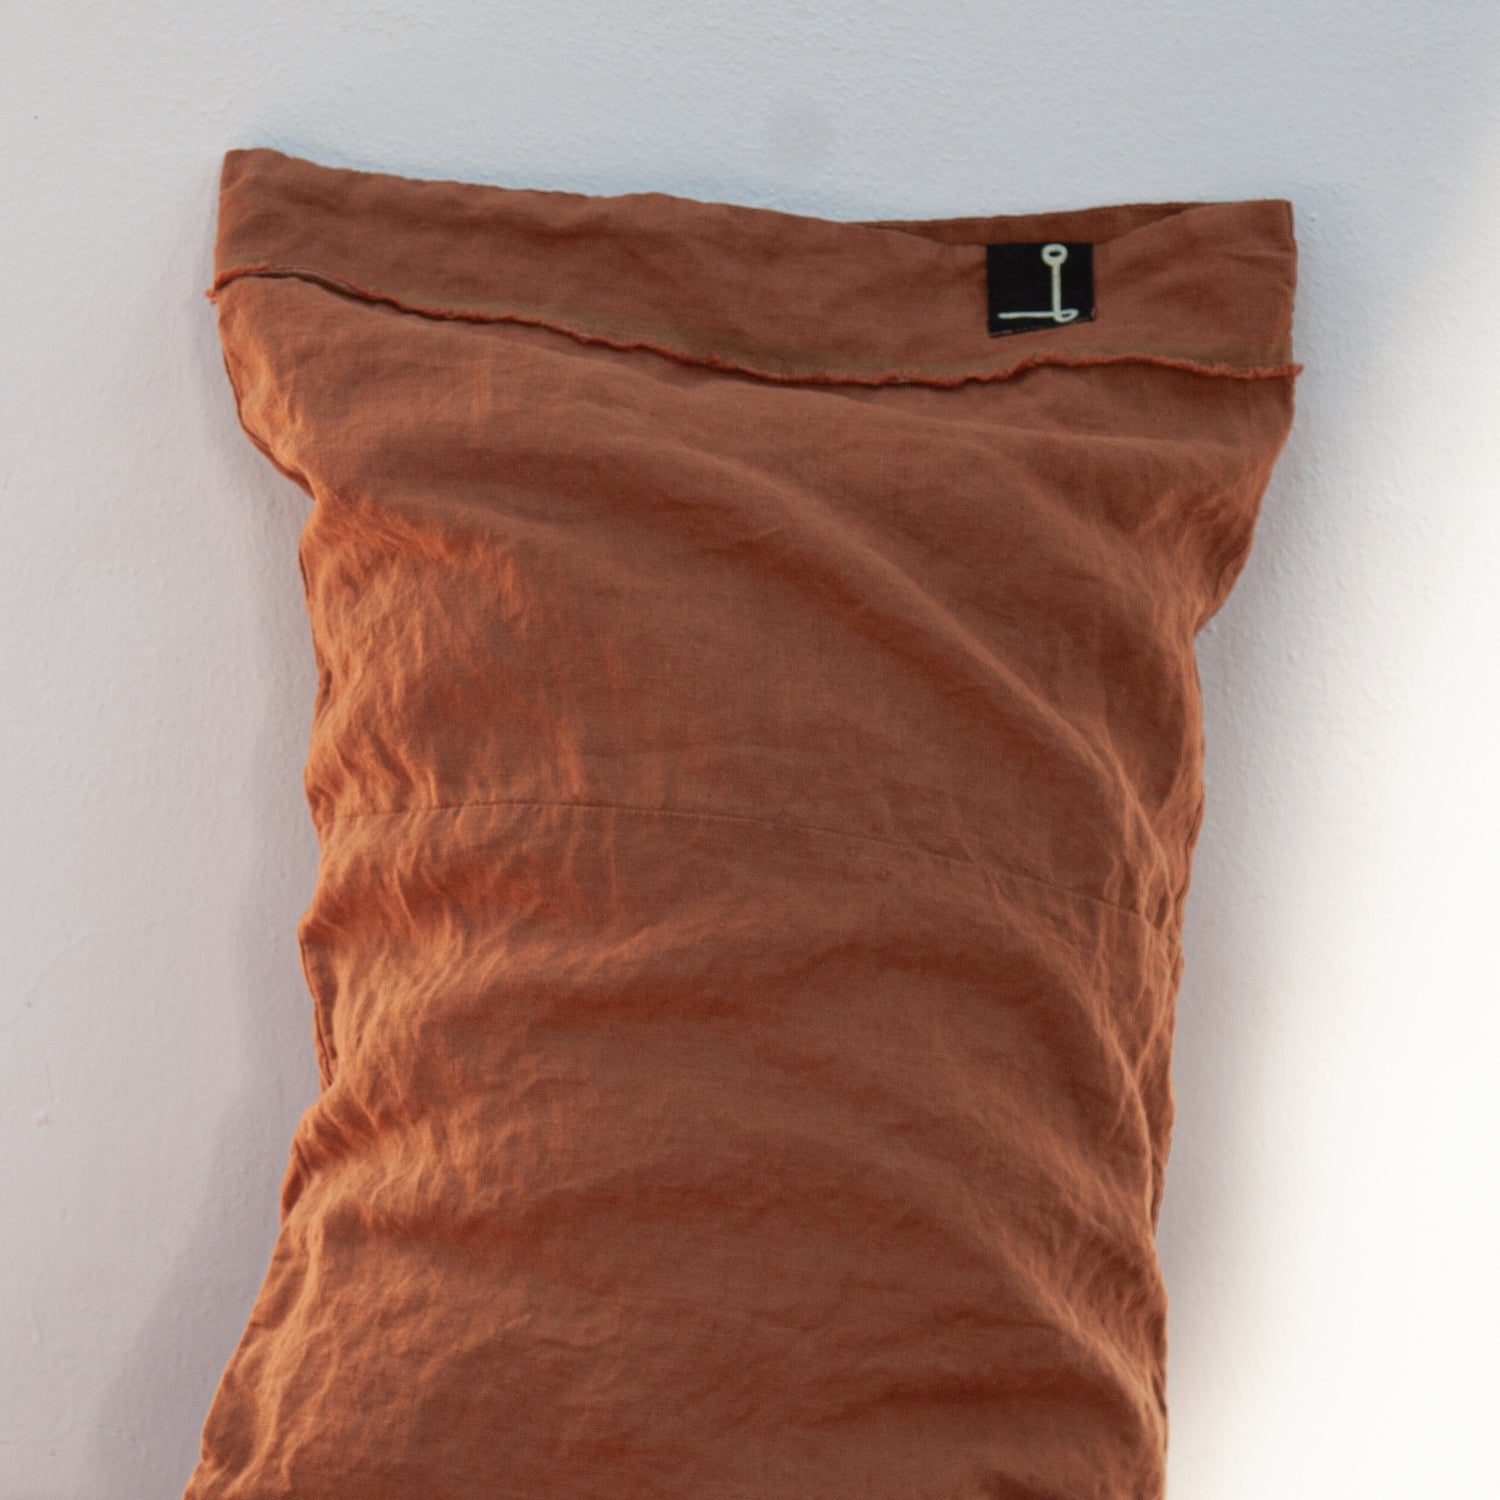 Almohada de lino teja. detalles